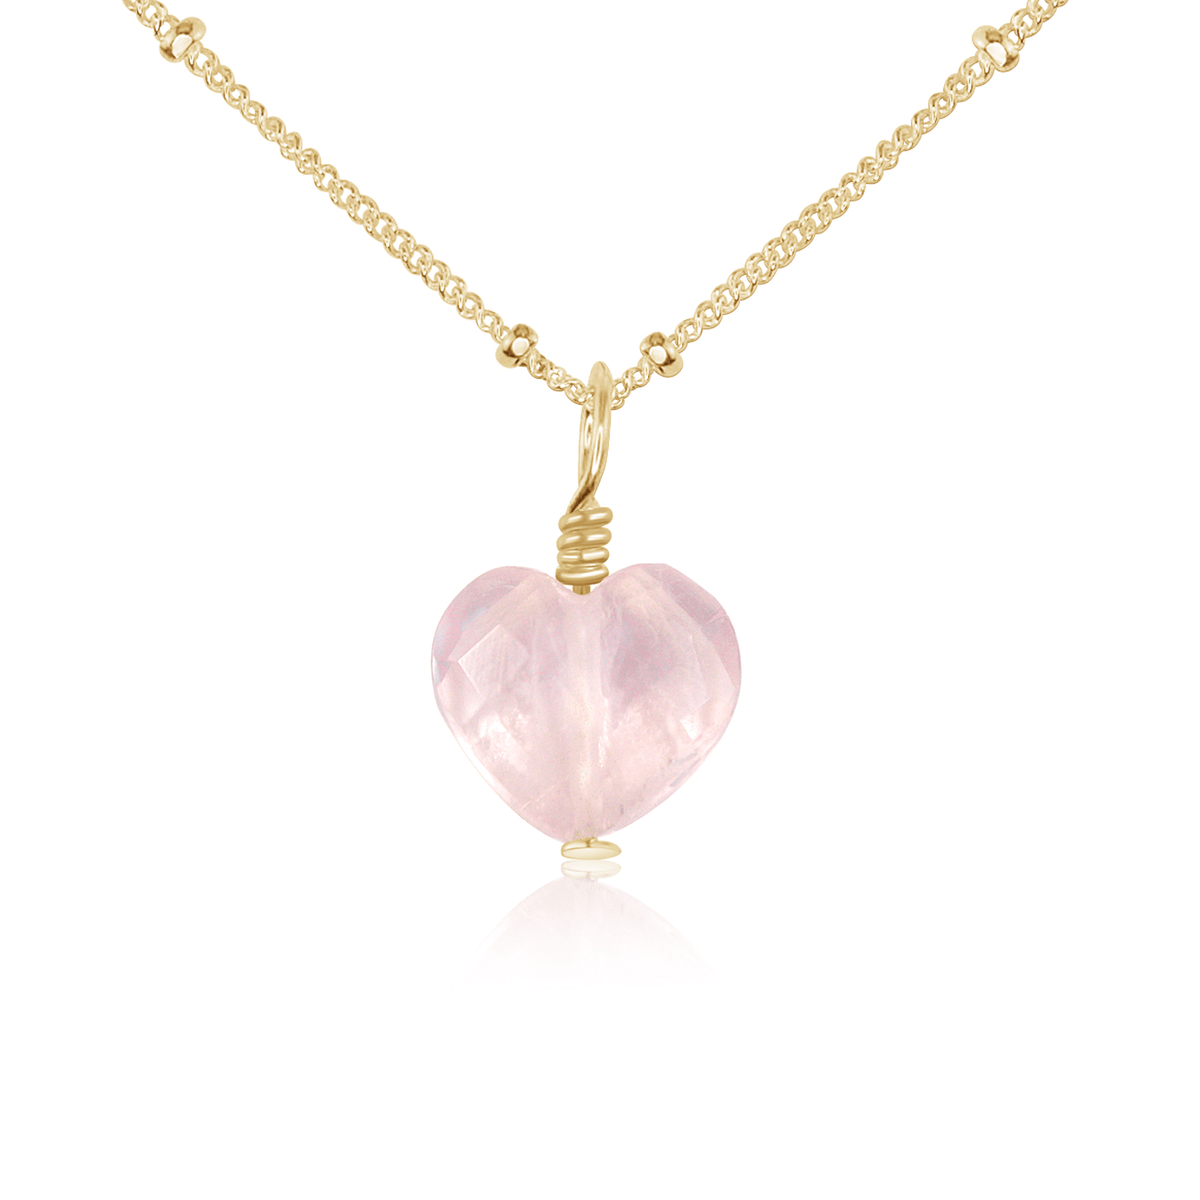 Rose Quartz Crystal Heart Pendant Necklace - Rose Quartz Crystal Heart Pendant Necklace - 14k Gold Fill / Satellite - Luna Tide Handmade Crystal Jewellery